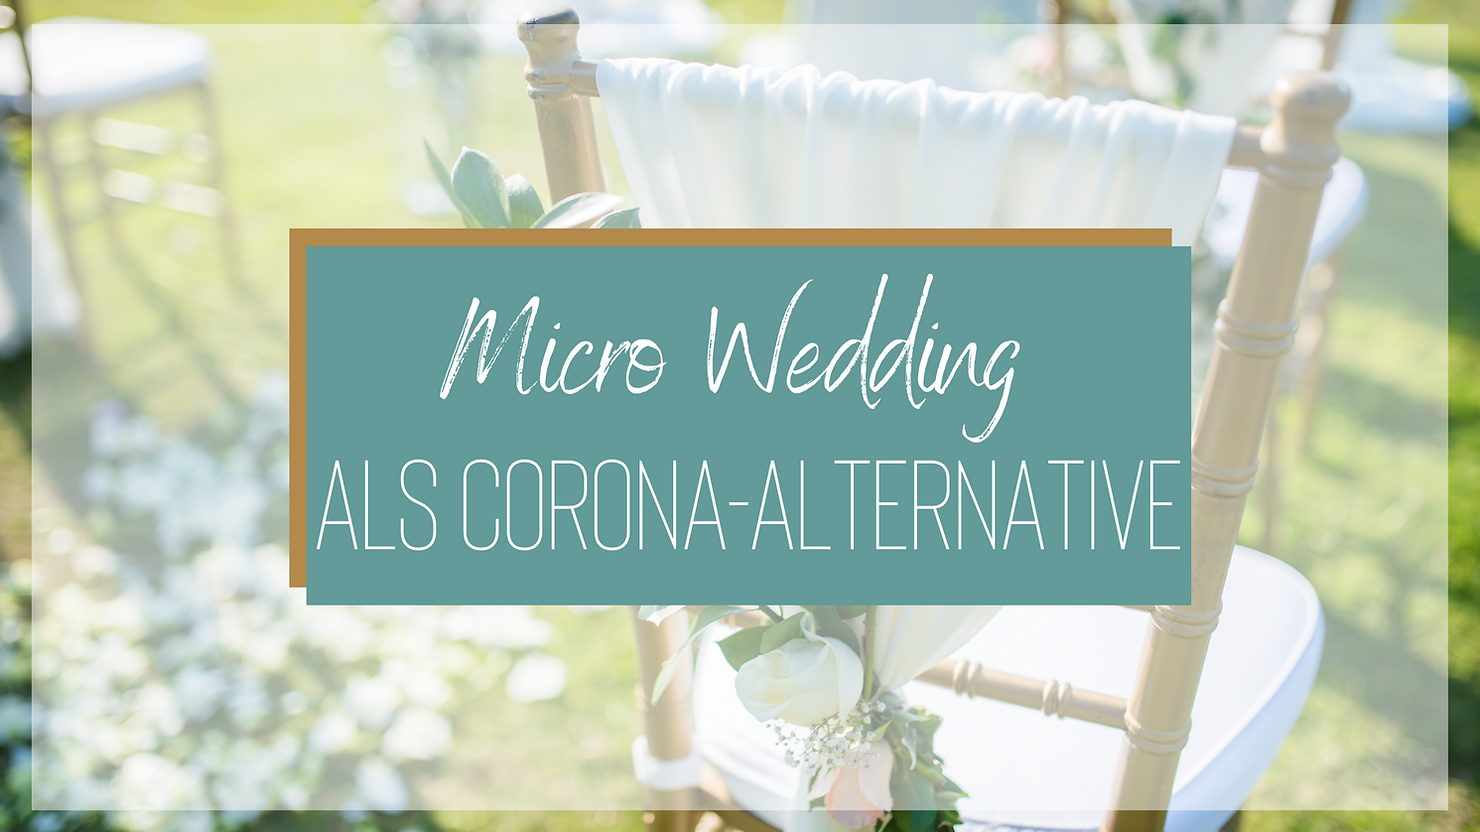 Die „Micro Wedding“ als Corona-Alternative